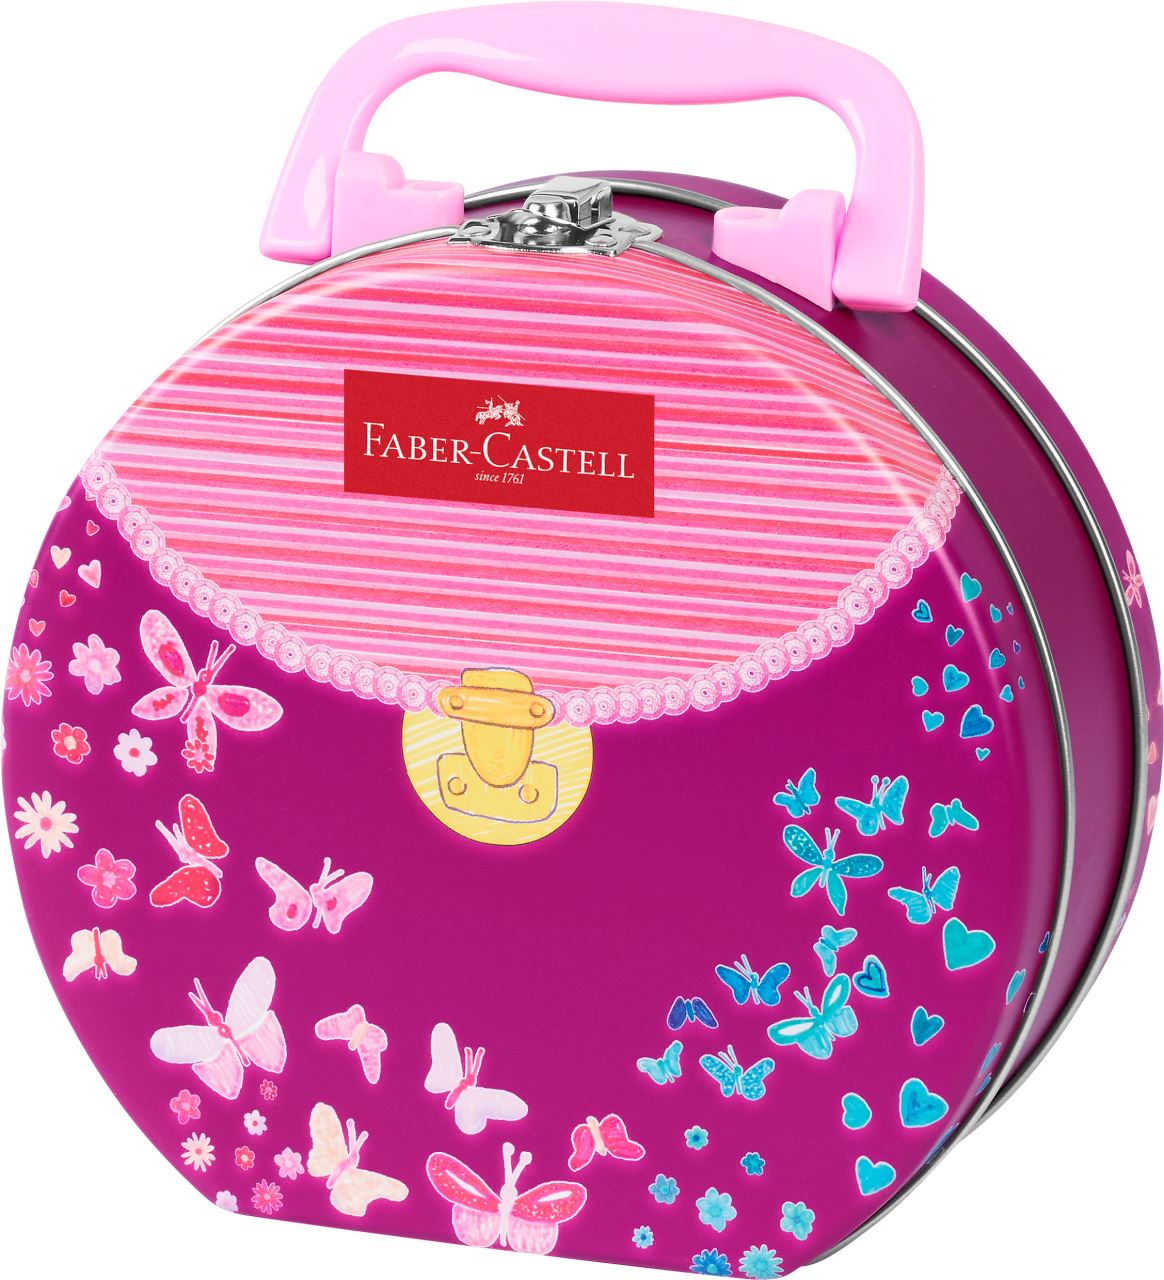 Faber-Castell - Connector fibre-tip pen handbag